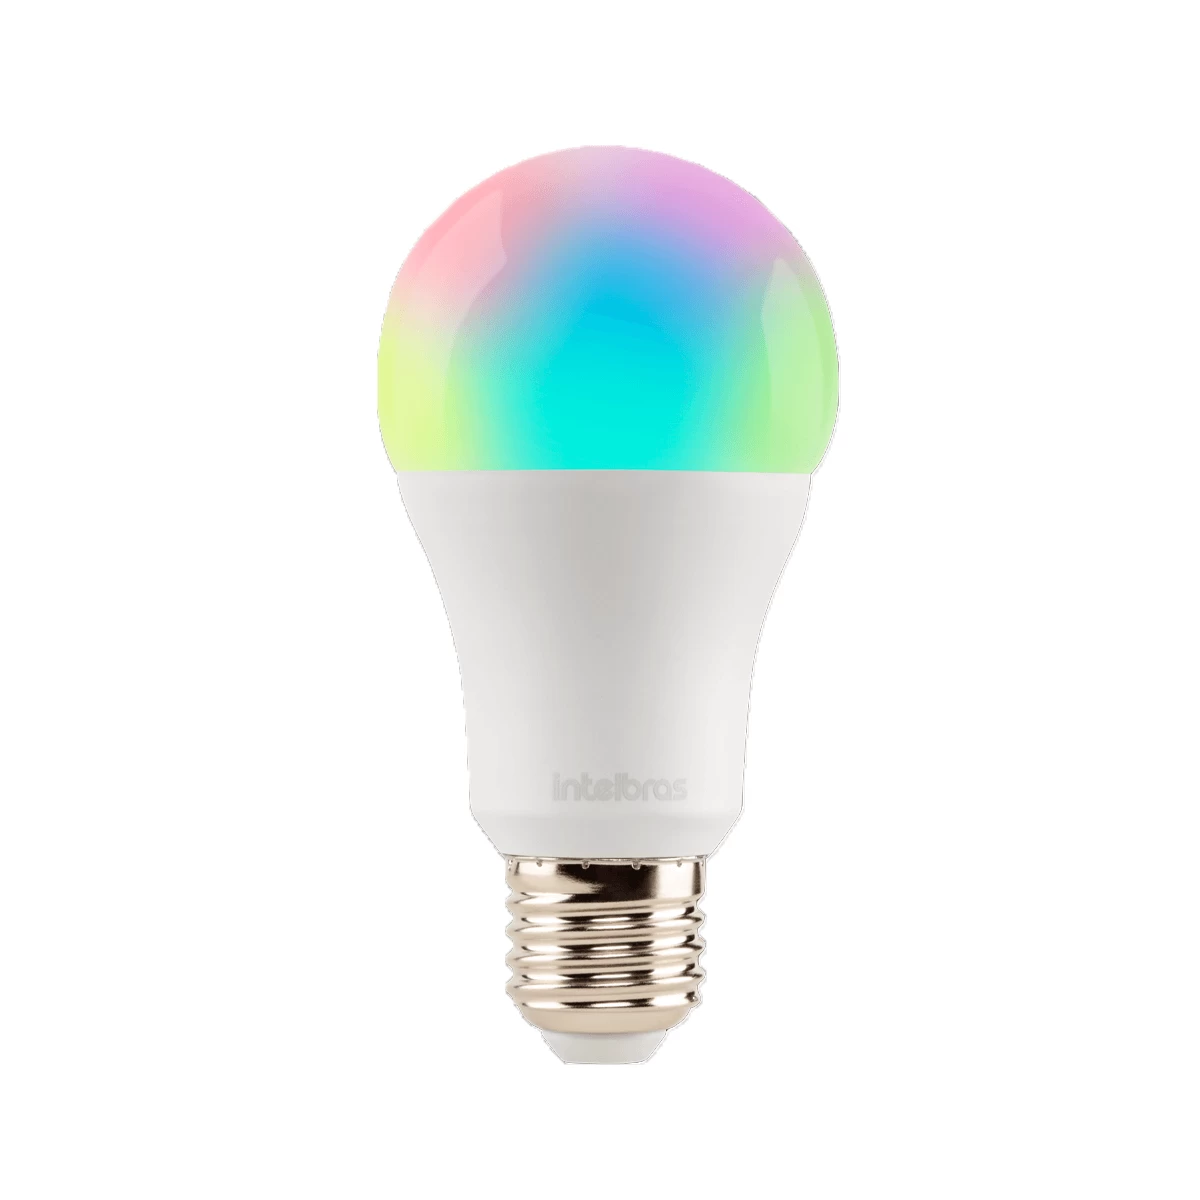 LAMPADA LED WI FI SMART EWS 407 IZY